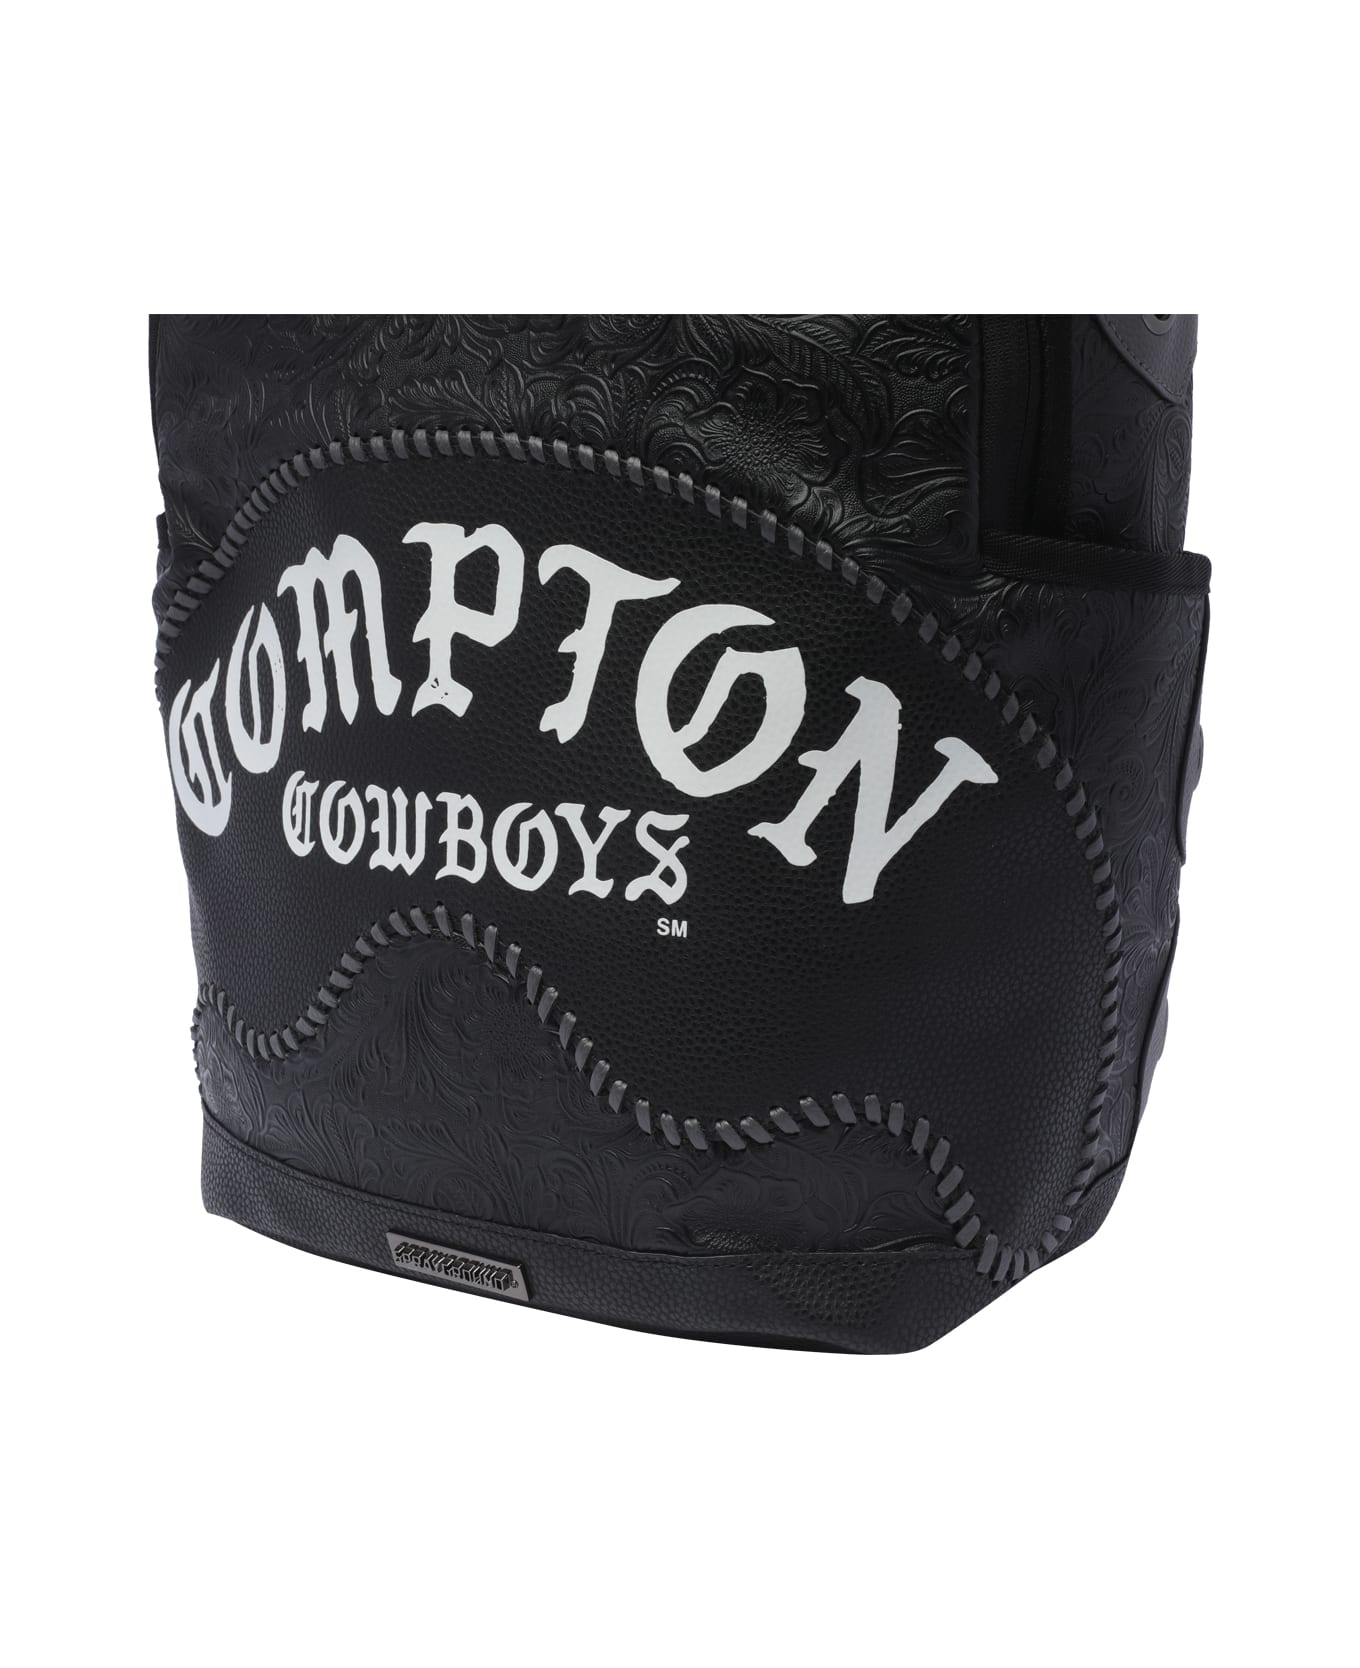 Sprayground Compton Backpack - Black バックパック